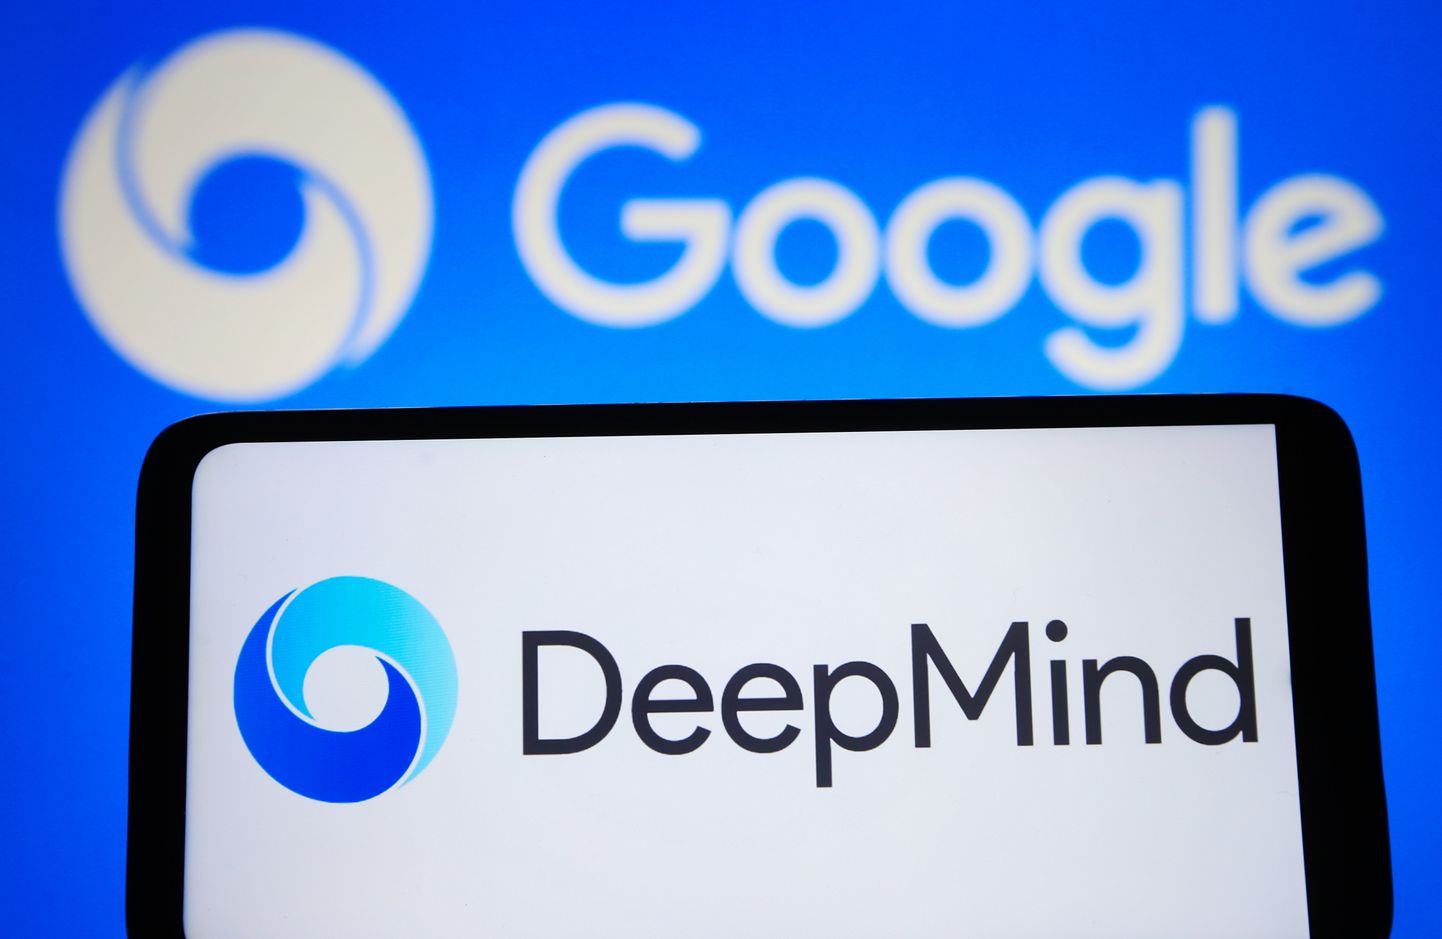 Google DeepMind logo.